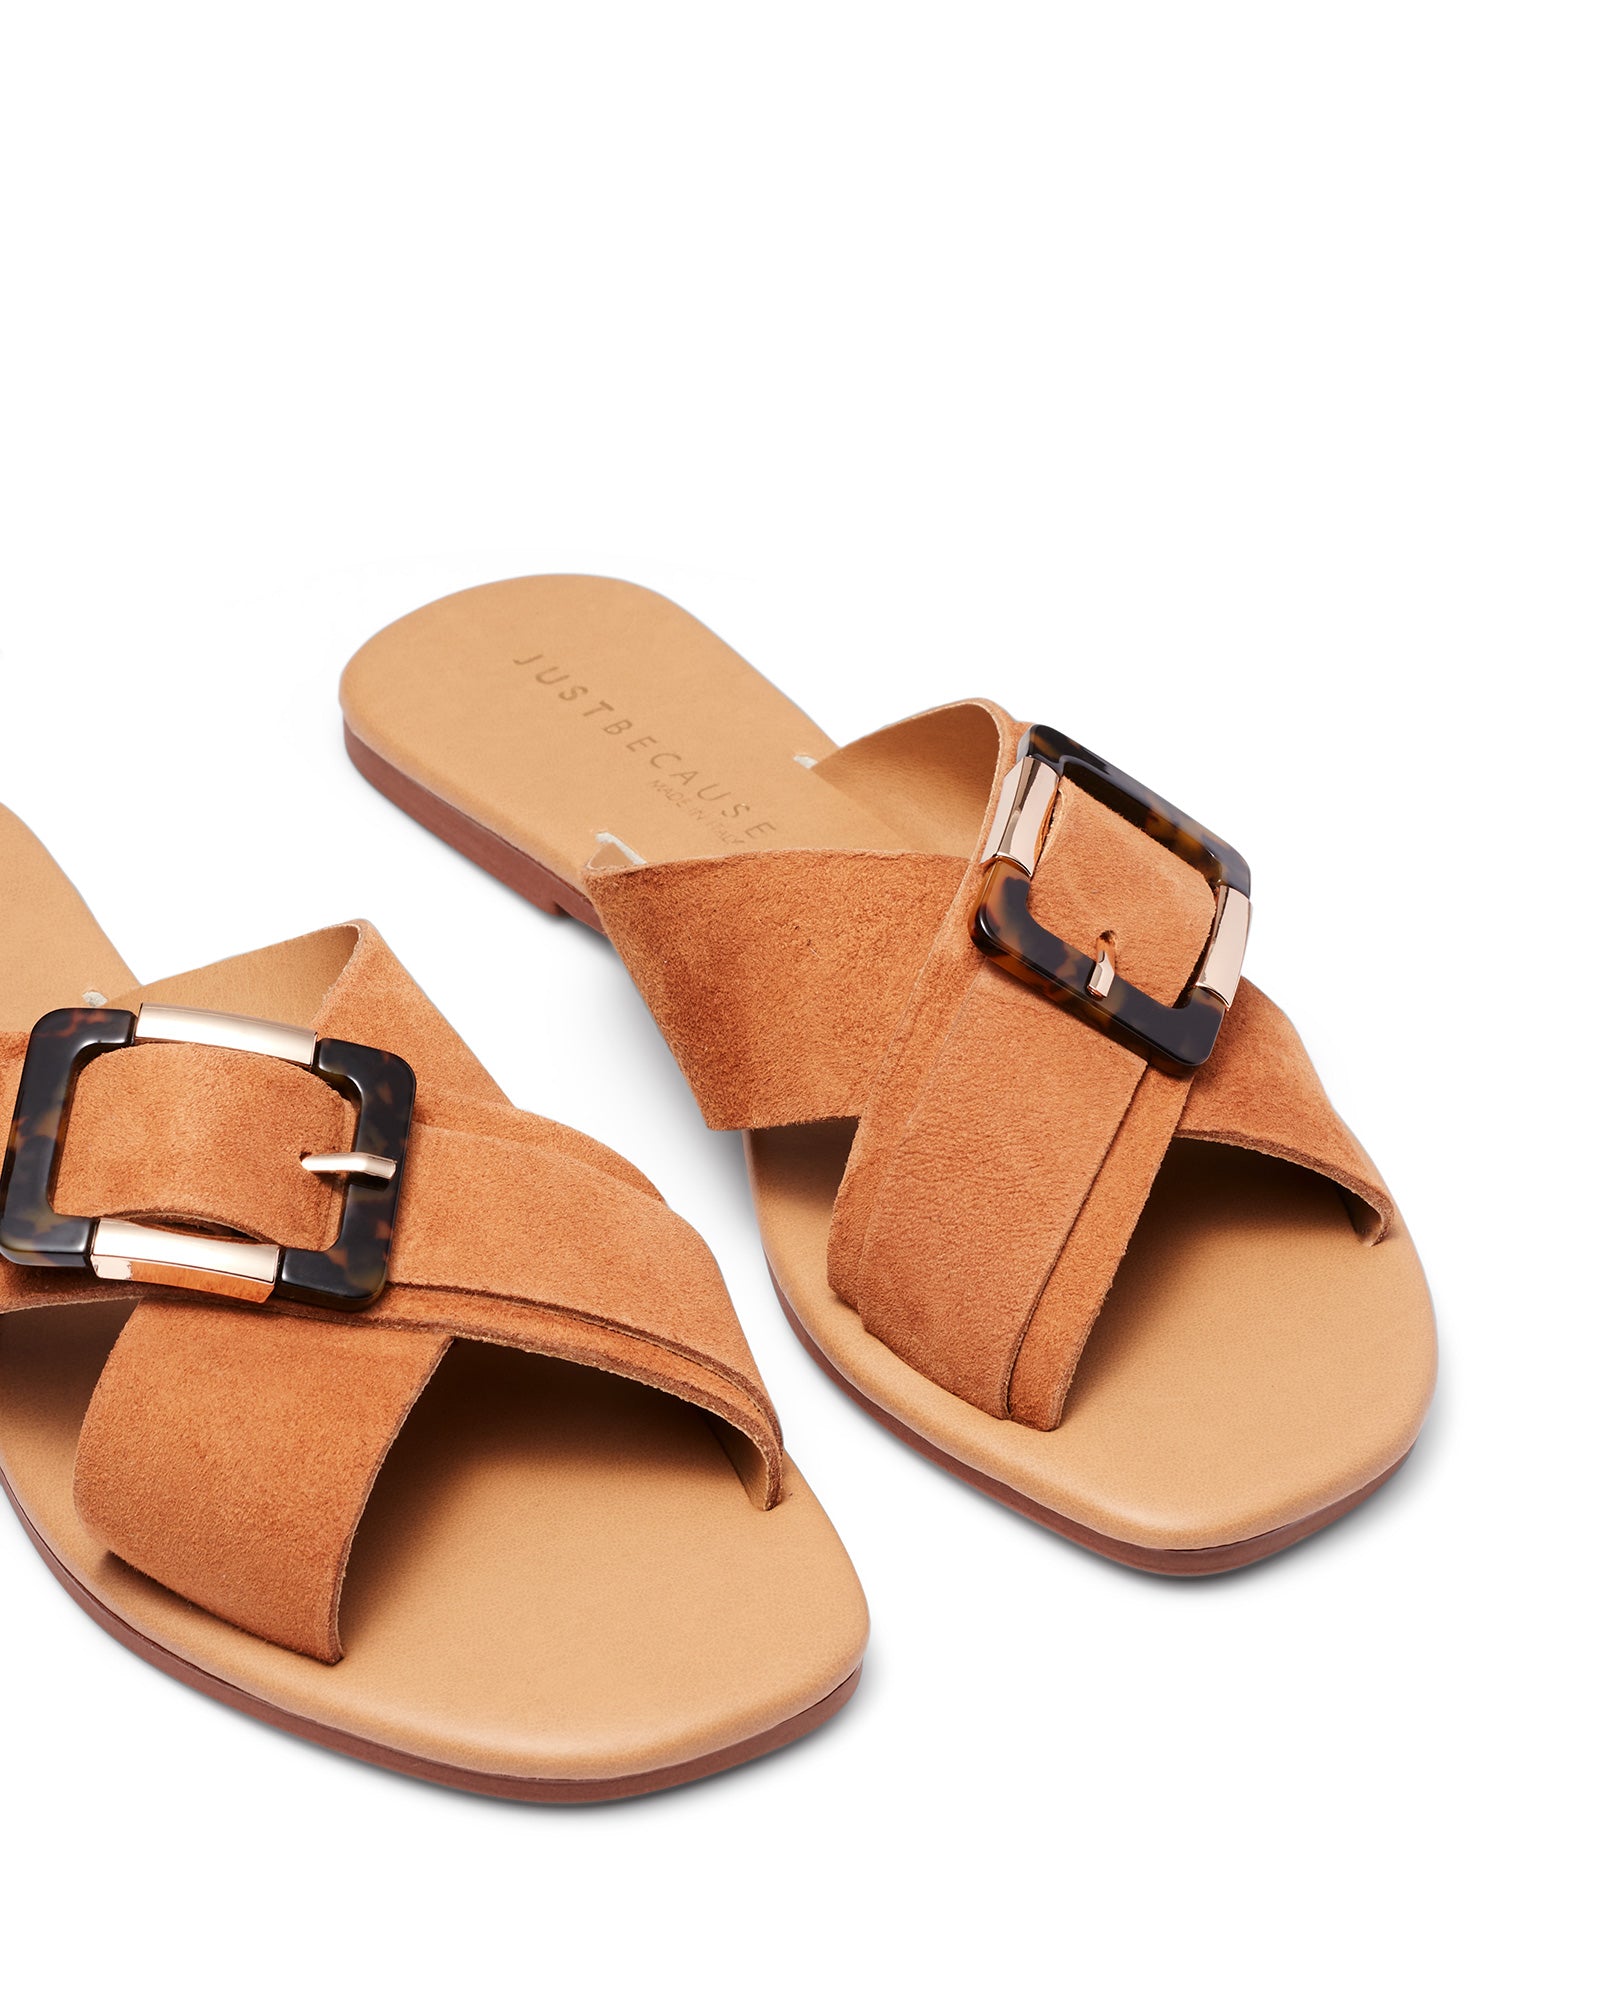 Just Because Shoes Rimini Camel | Leather Sandals | Slides | Flats